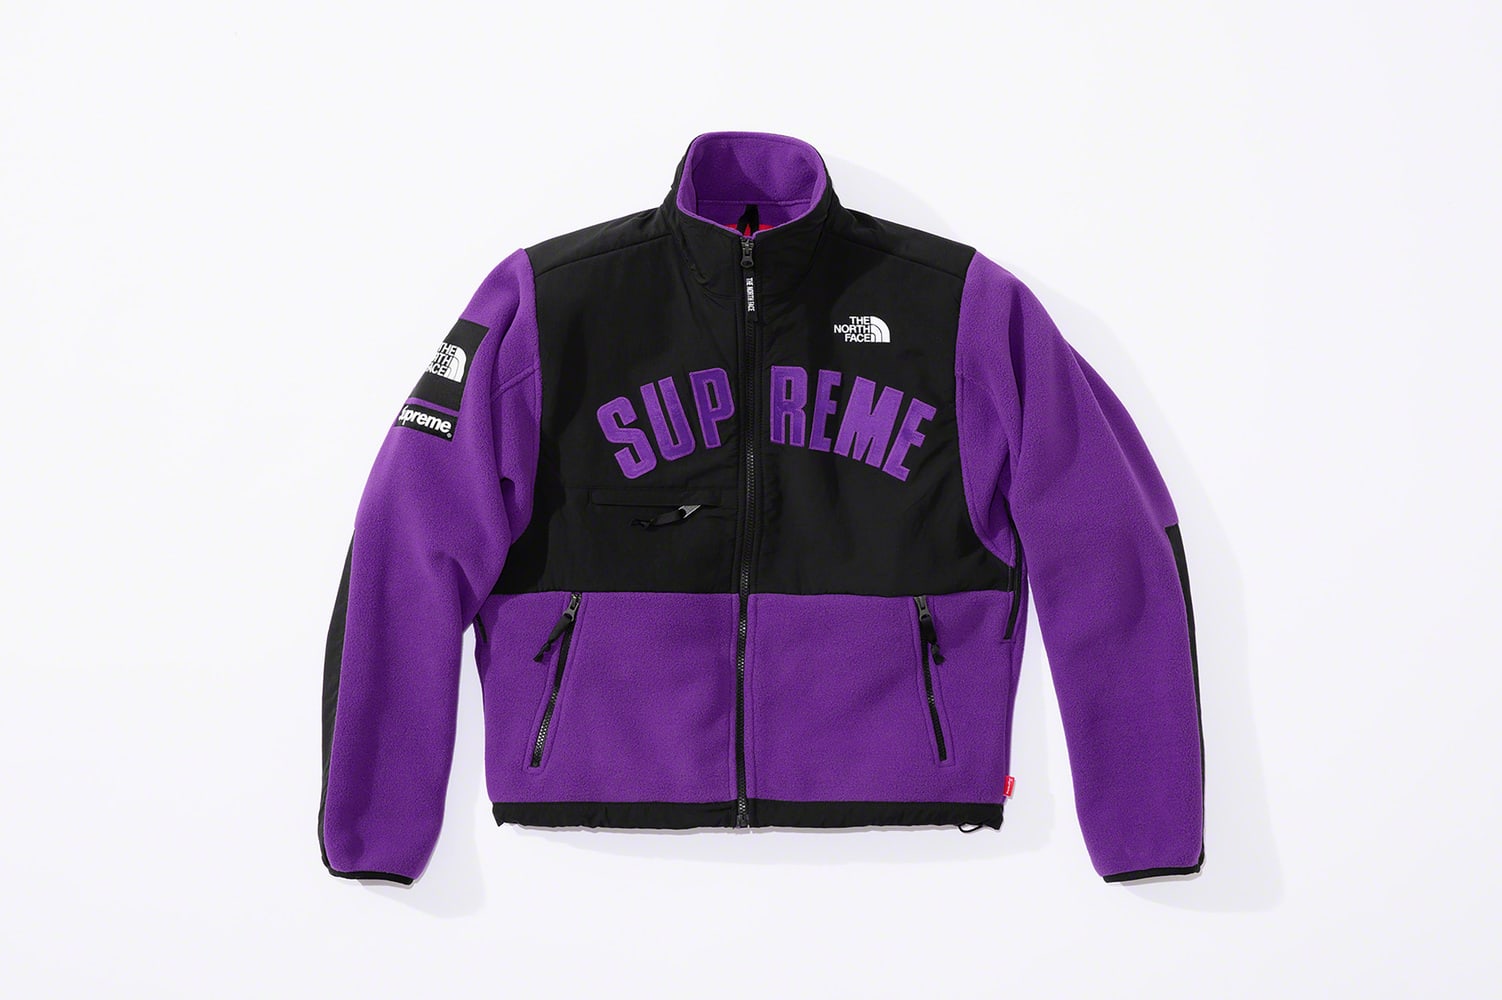 Supreme X The North Face Purple Arc Denali Fleece Blanket Supreme